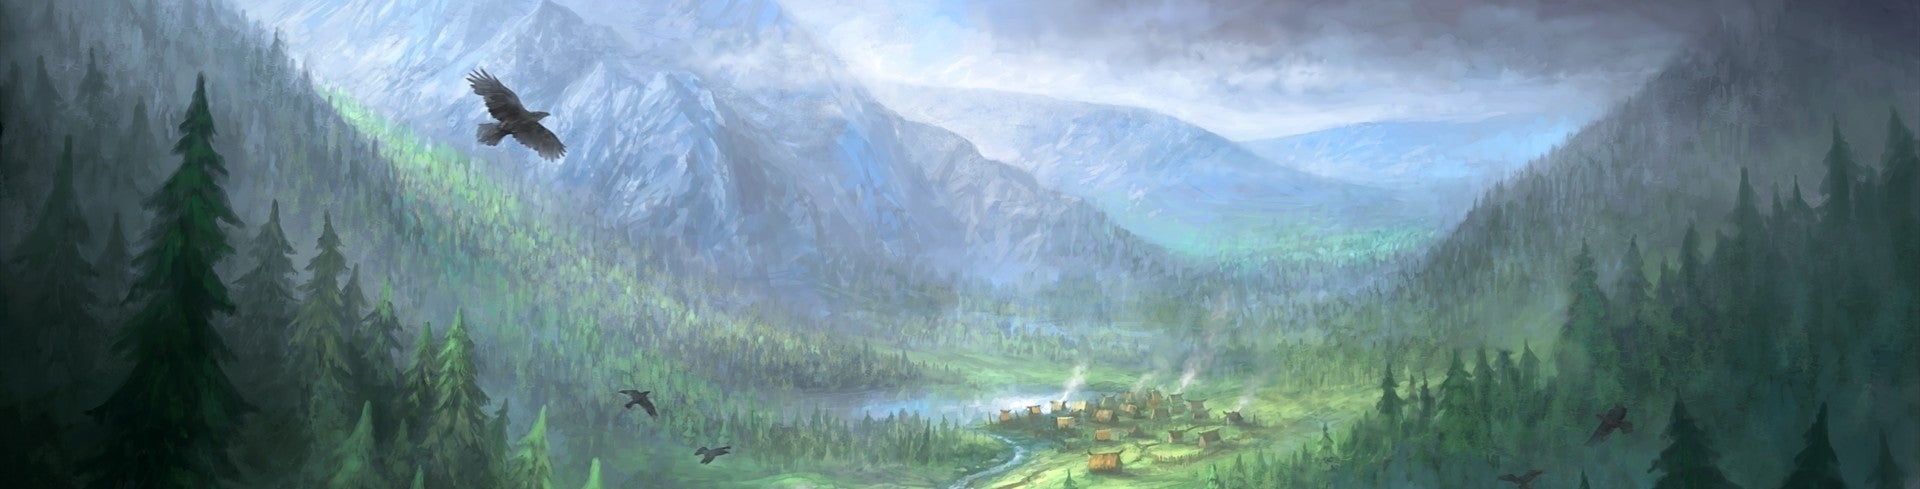 Obrazki dla Runemaster - turowe RPG od Paradox Interactive stawia na klasykę